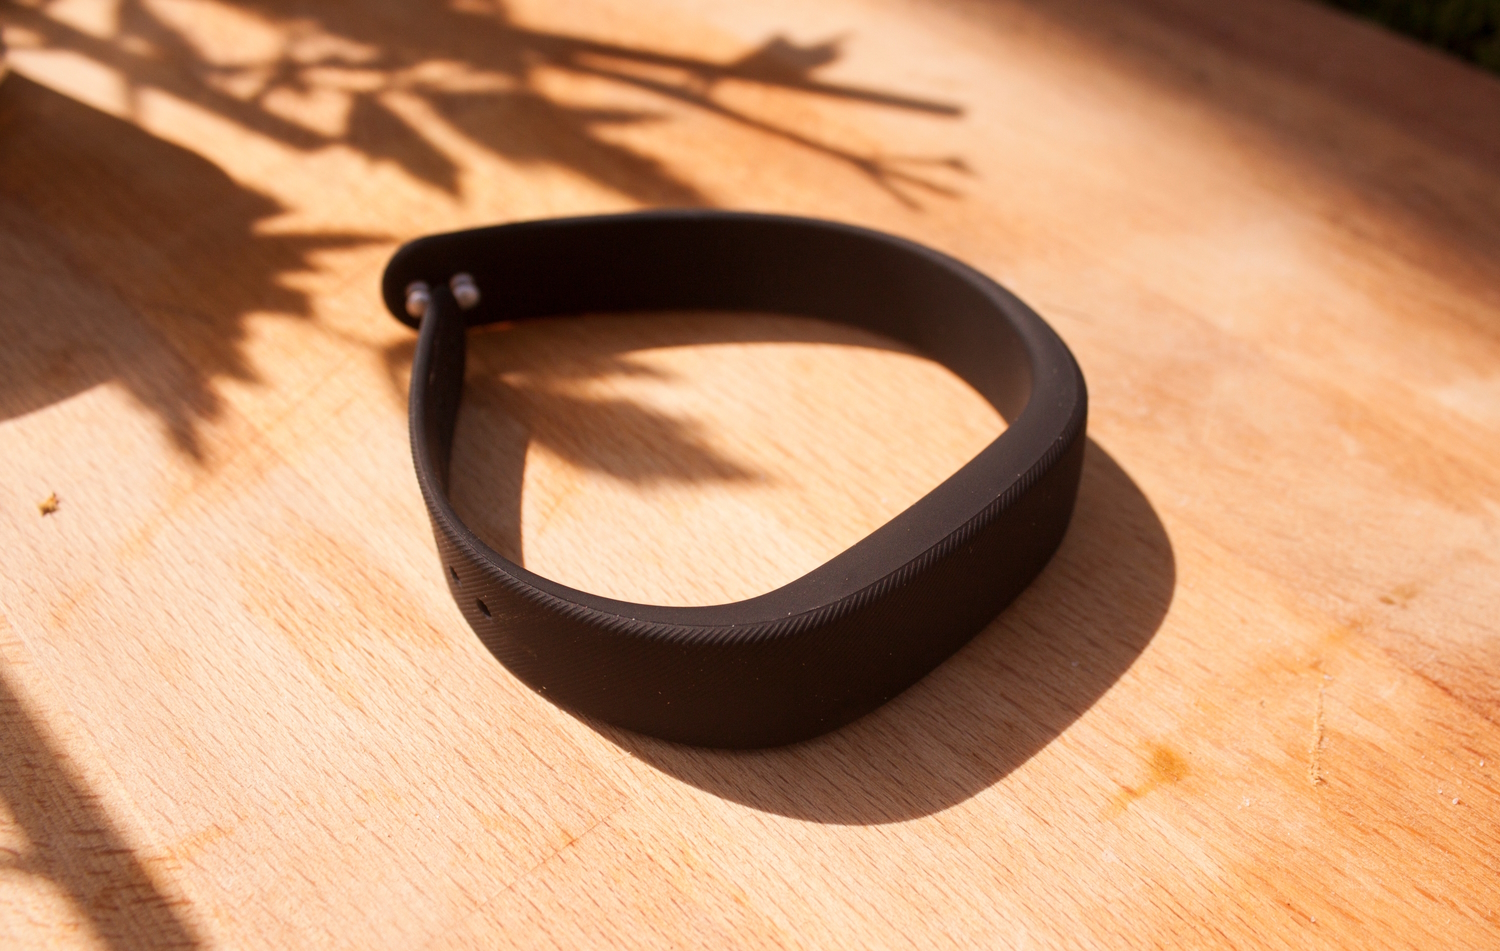 Smartband de color negro en una mesa de madera